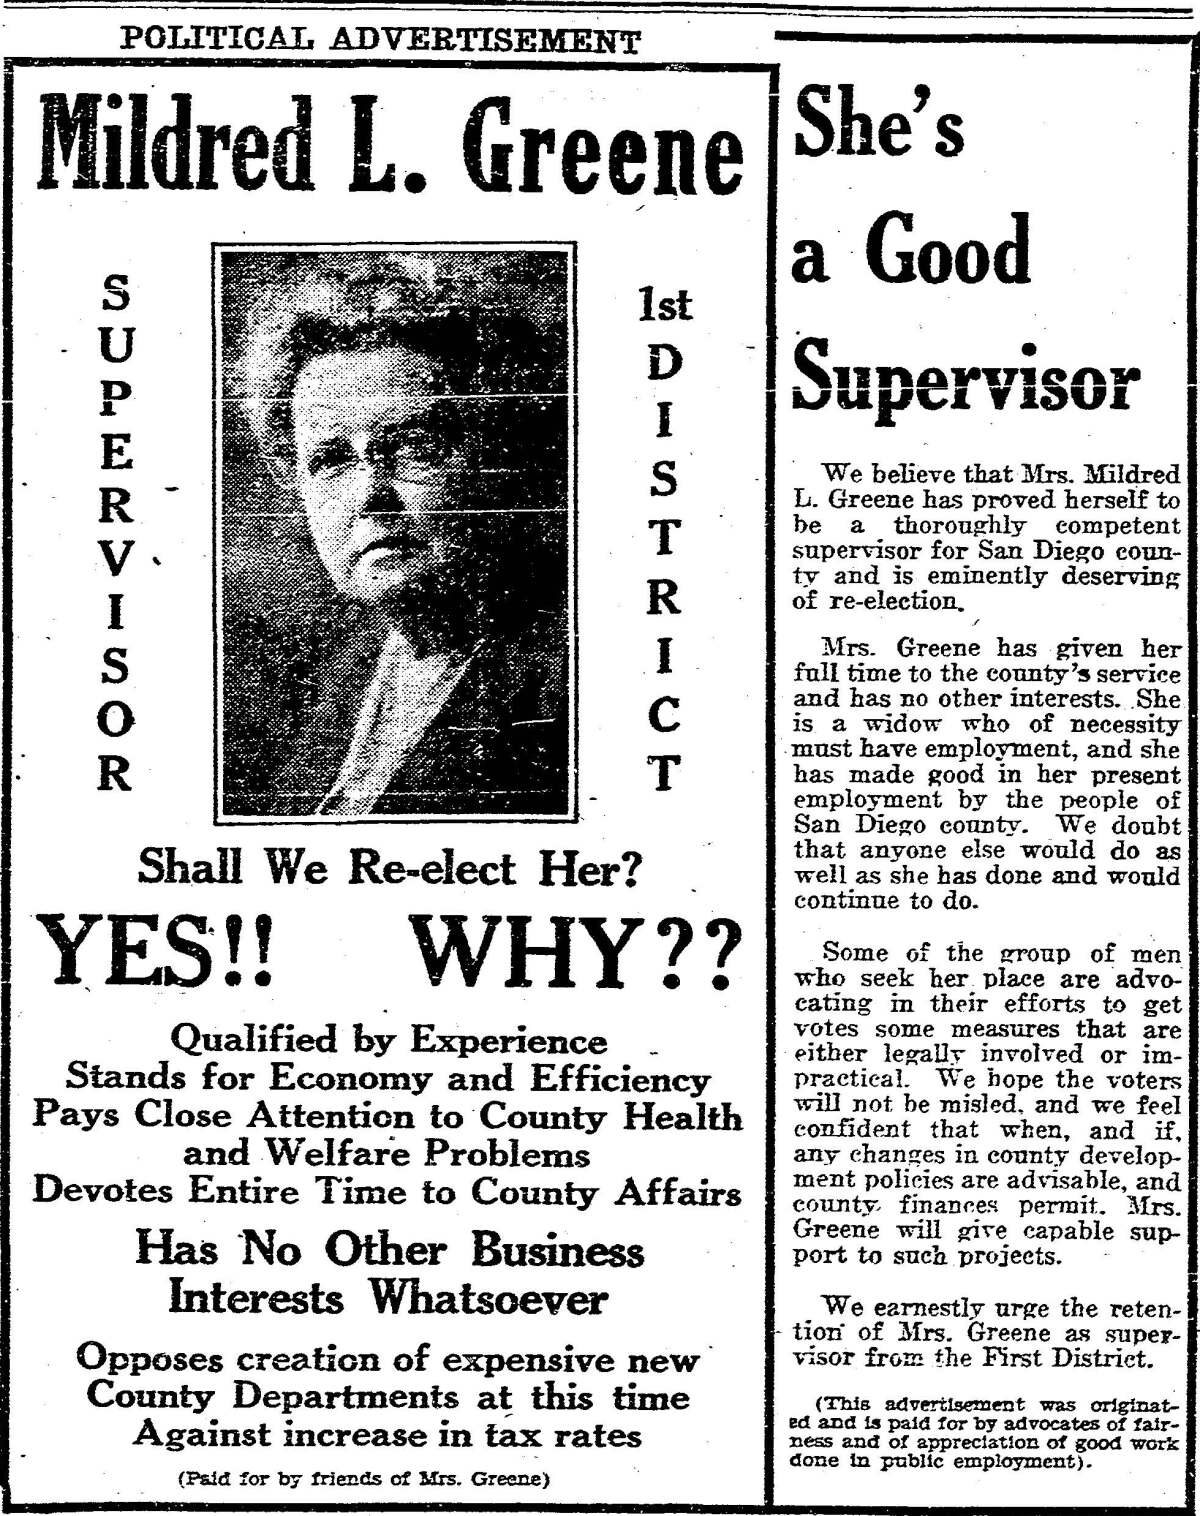 Mildred L. Greene 1928 political advertisement.